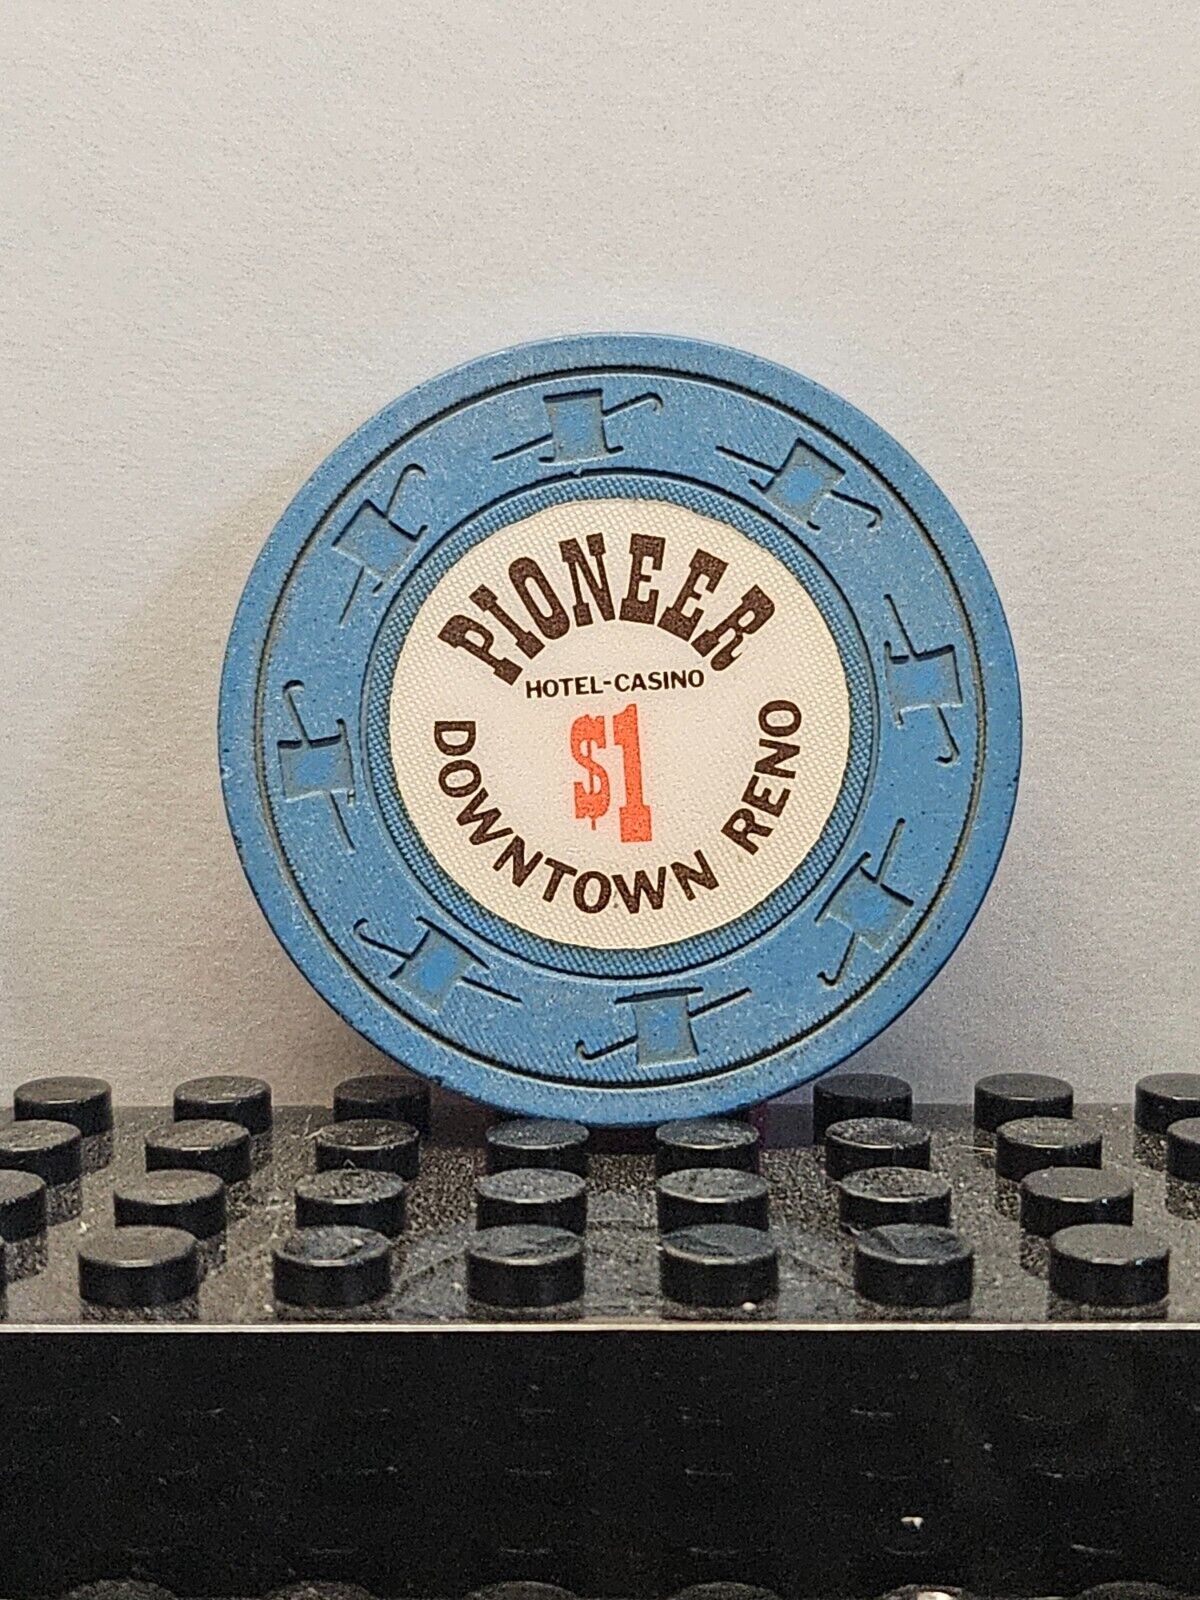 Pioneer $1 reno casino chip